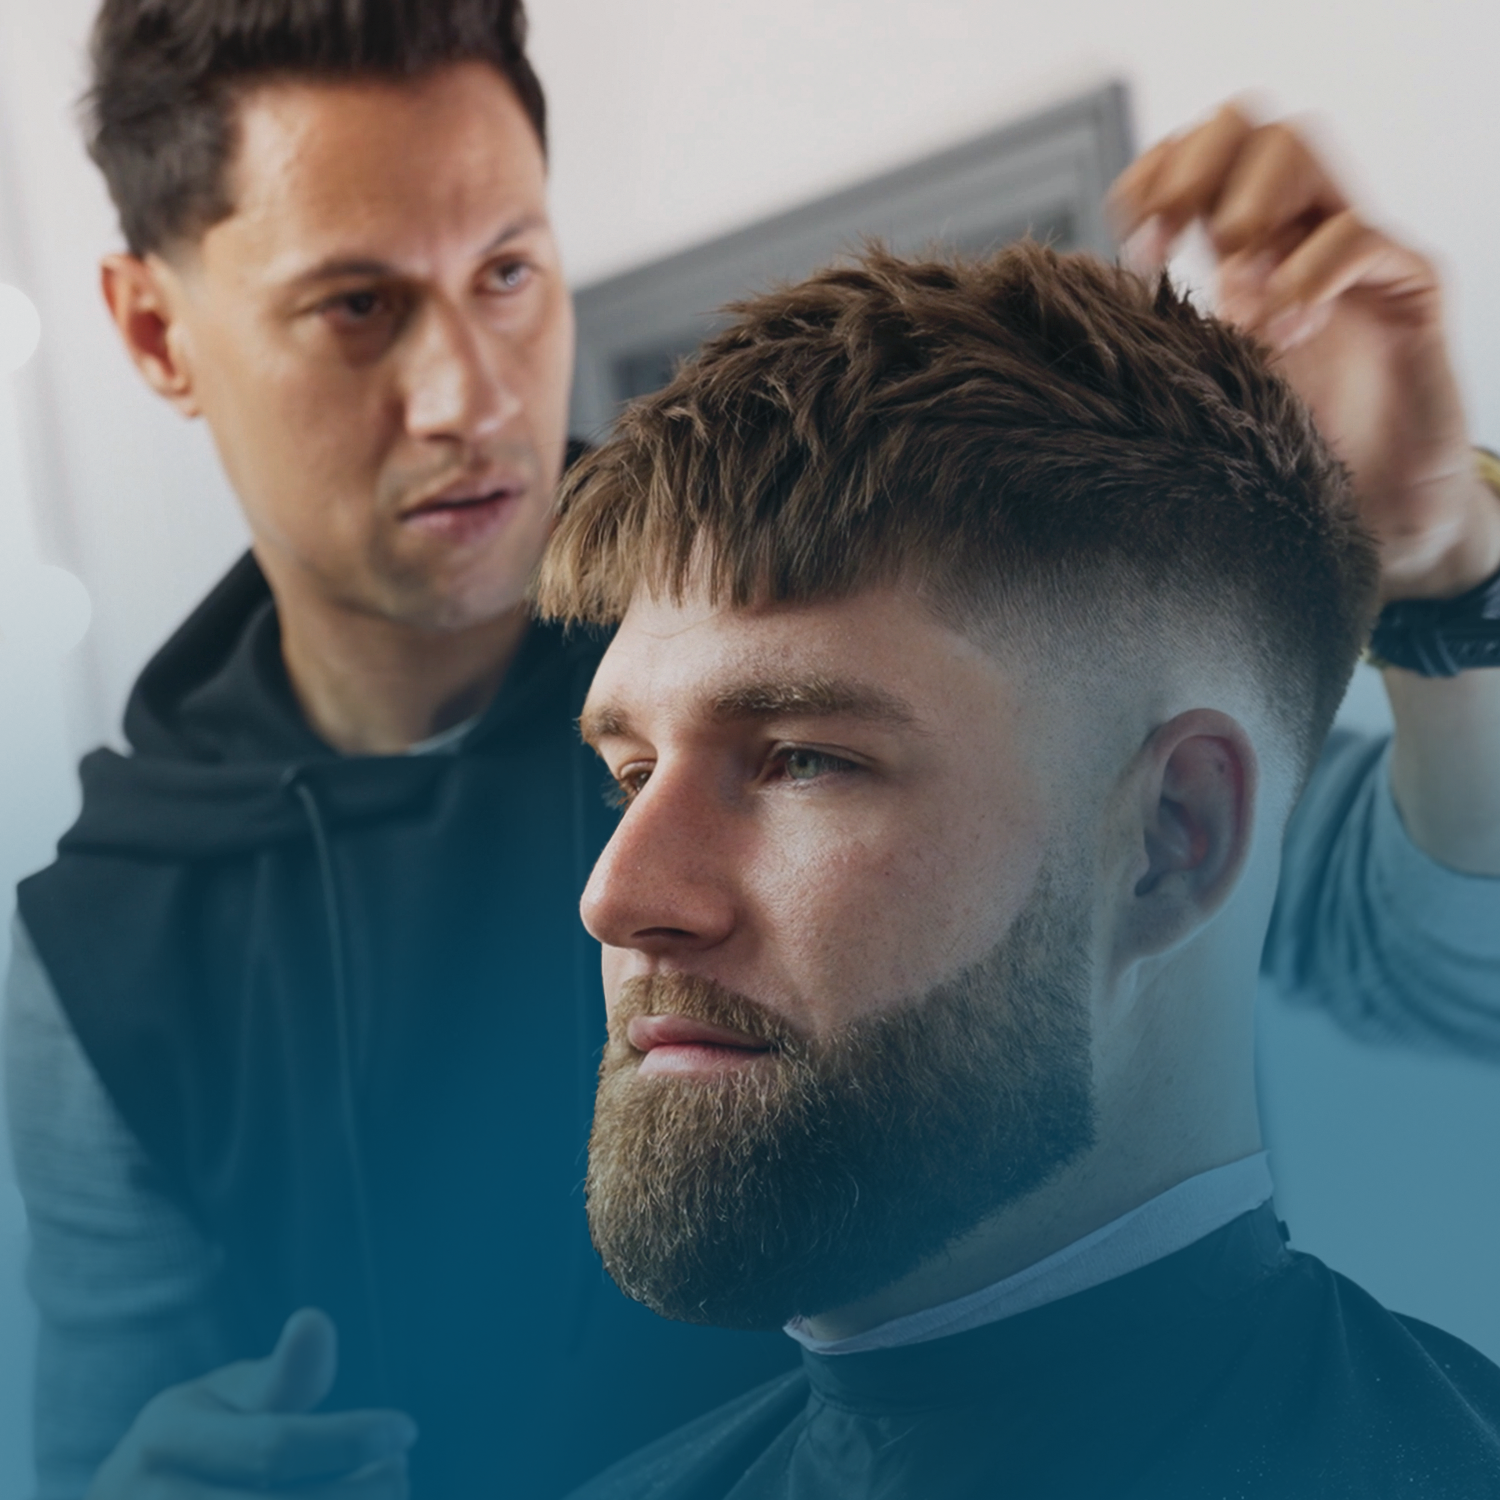 Barber Cape - LV - White Hairco Austrlaia Online